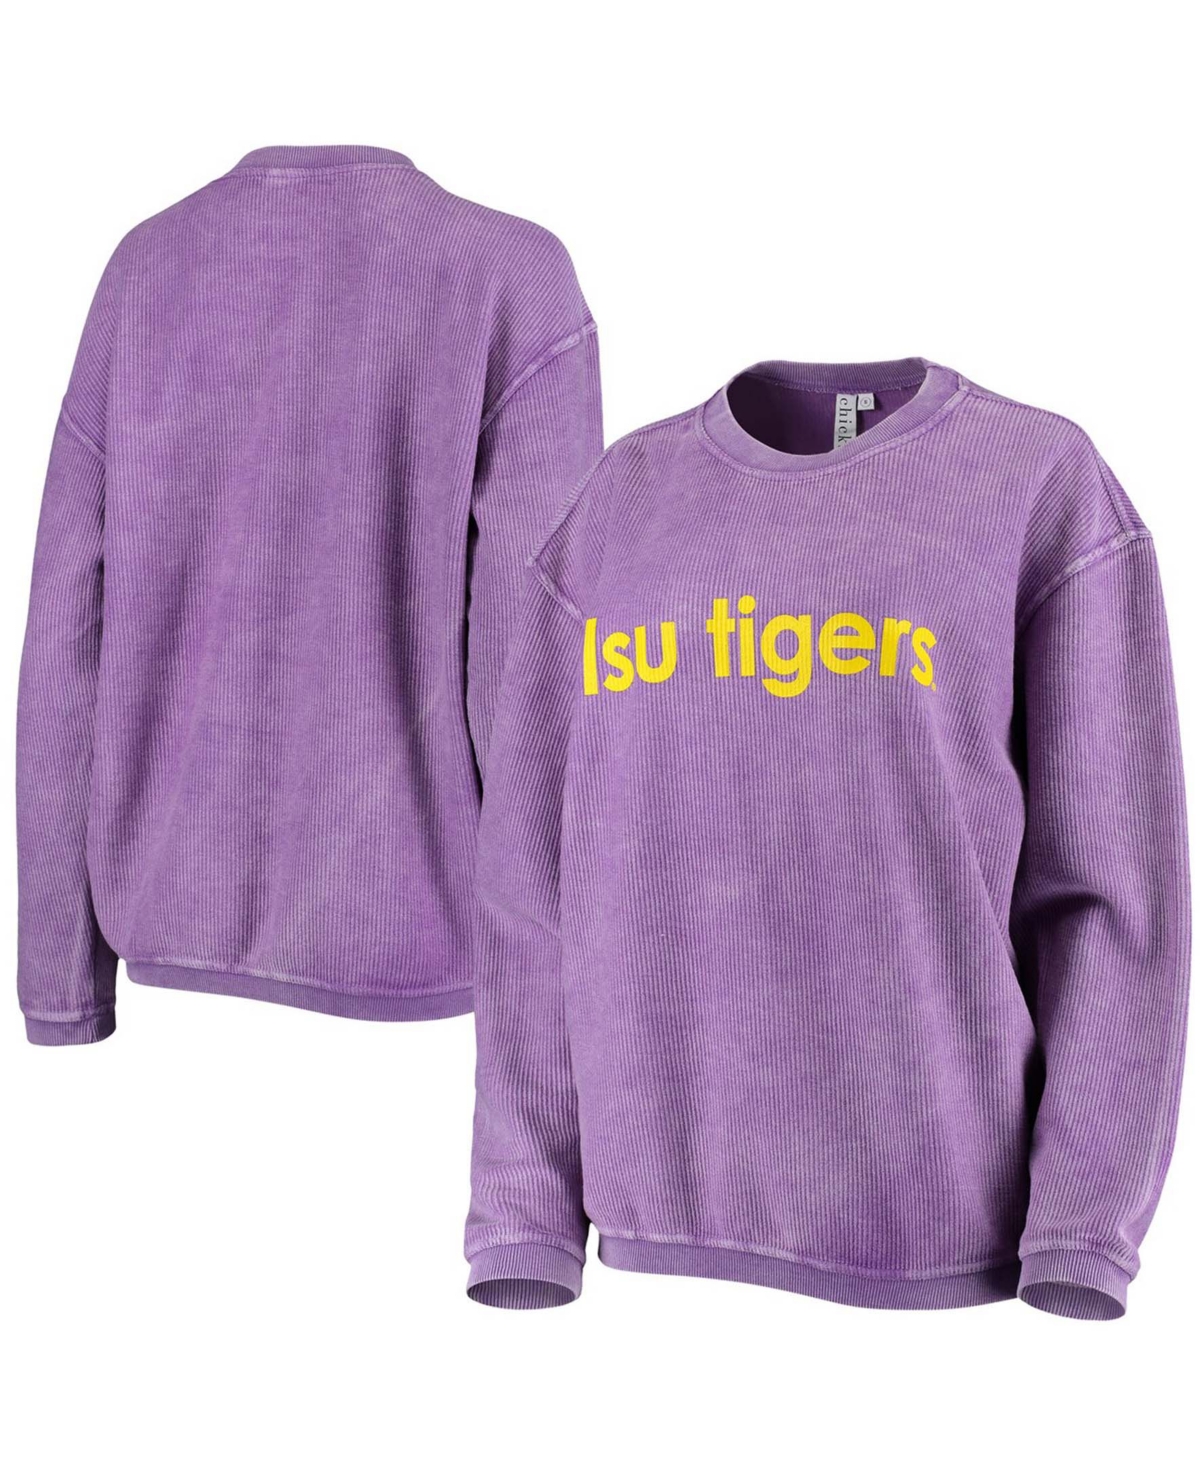 Chicka-d Women's Purple Lsu Tigers Corded Pullover Sweatshirt